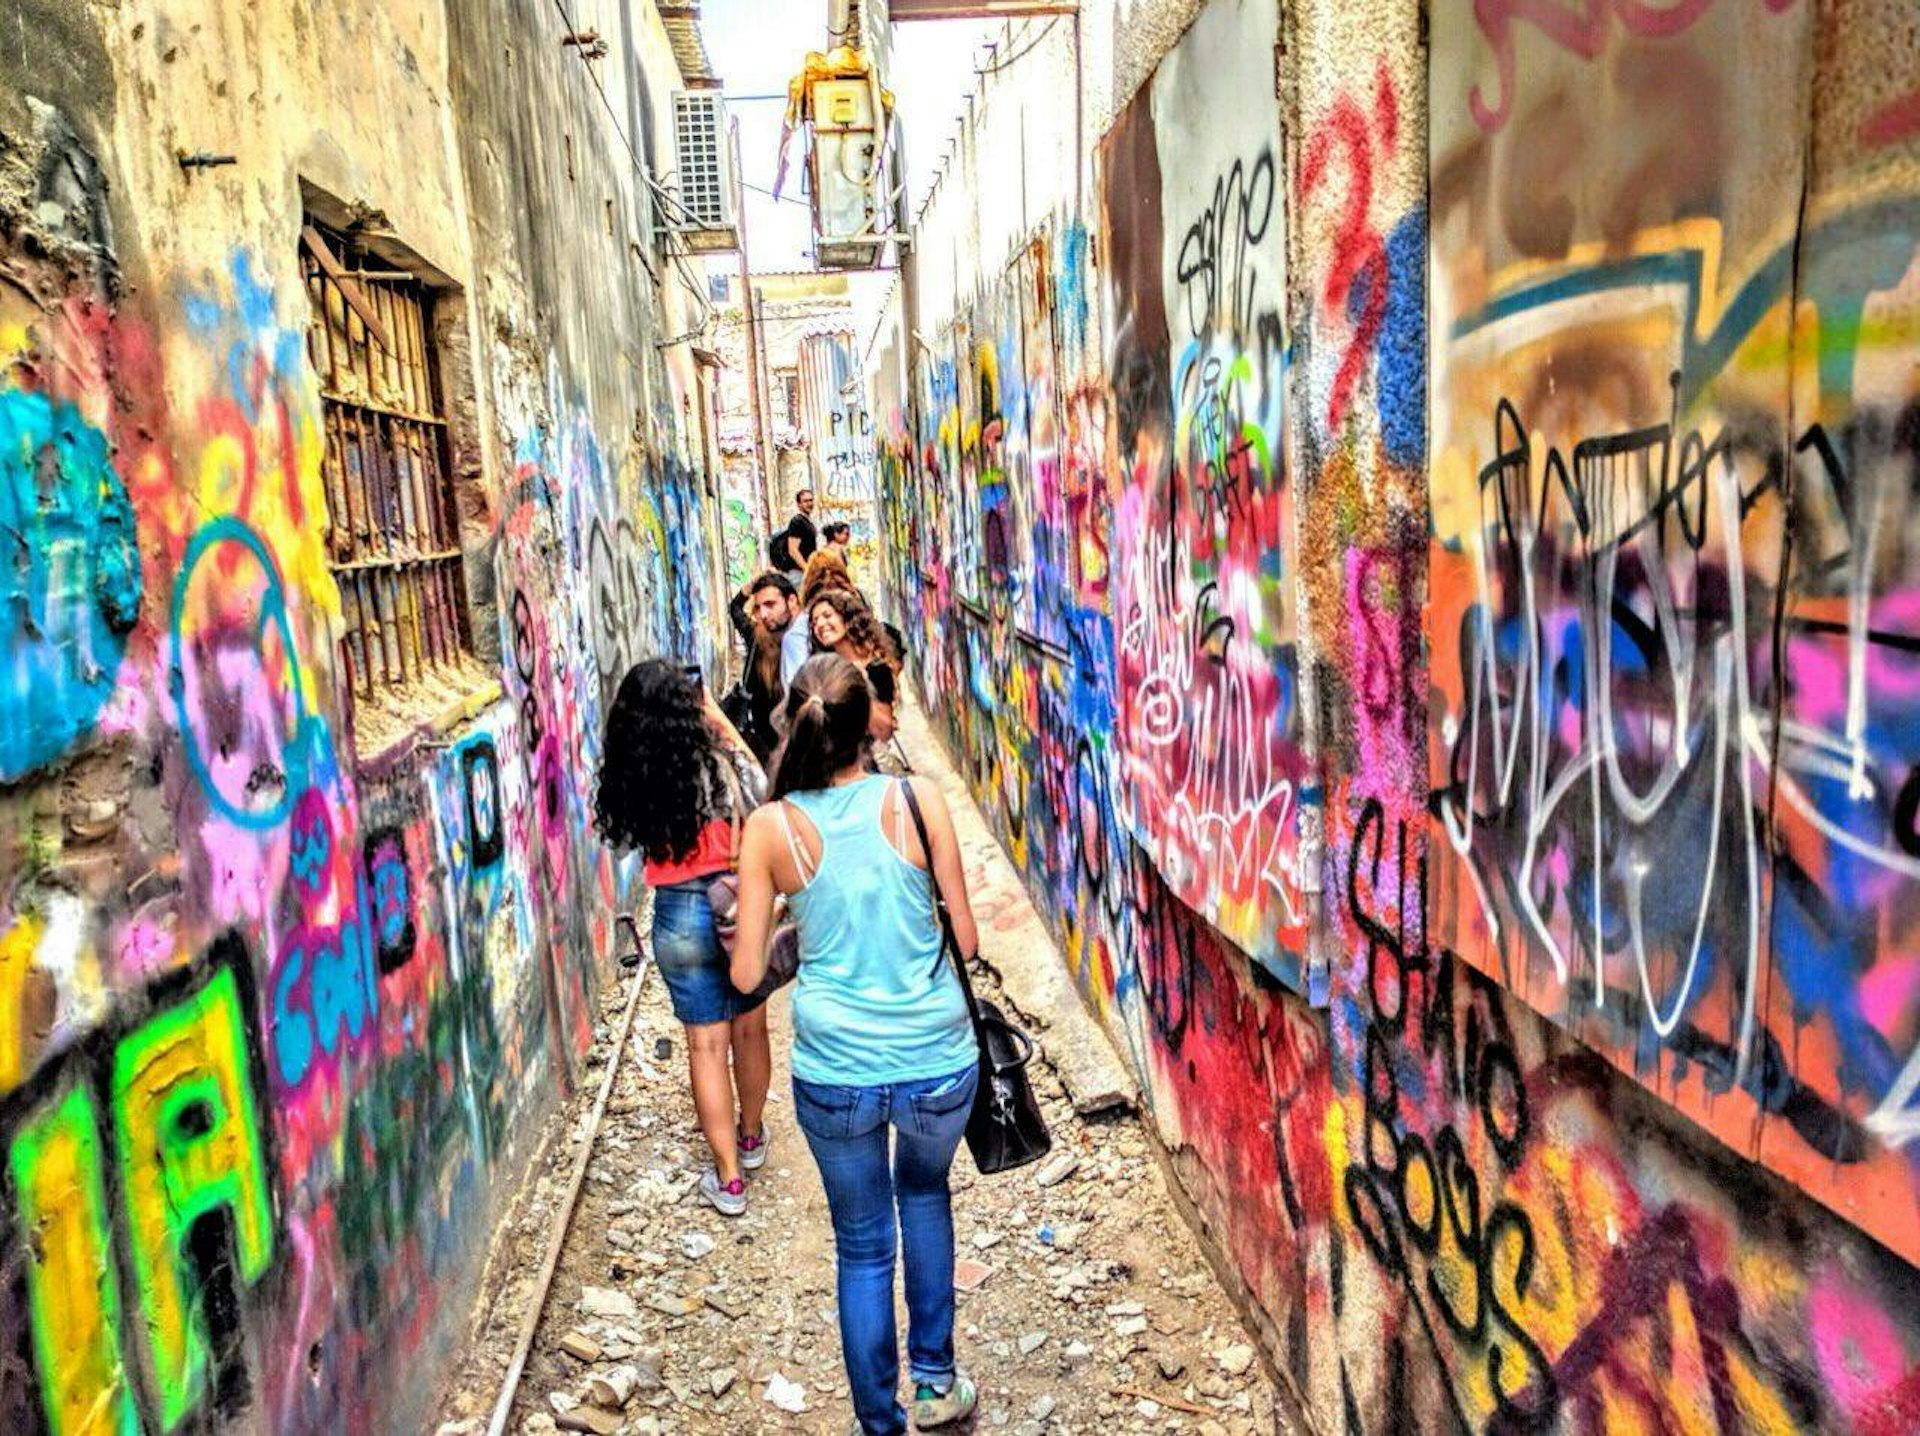 Graffiti tour in Tel Aviv alley. Image by Grafitiyul